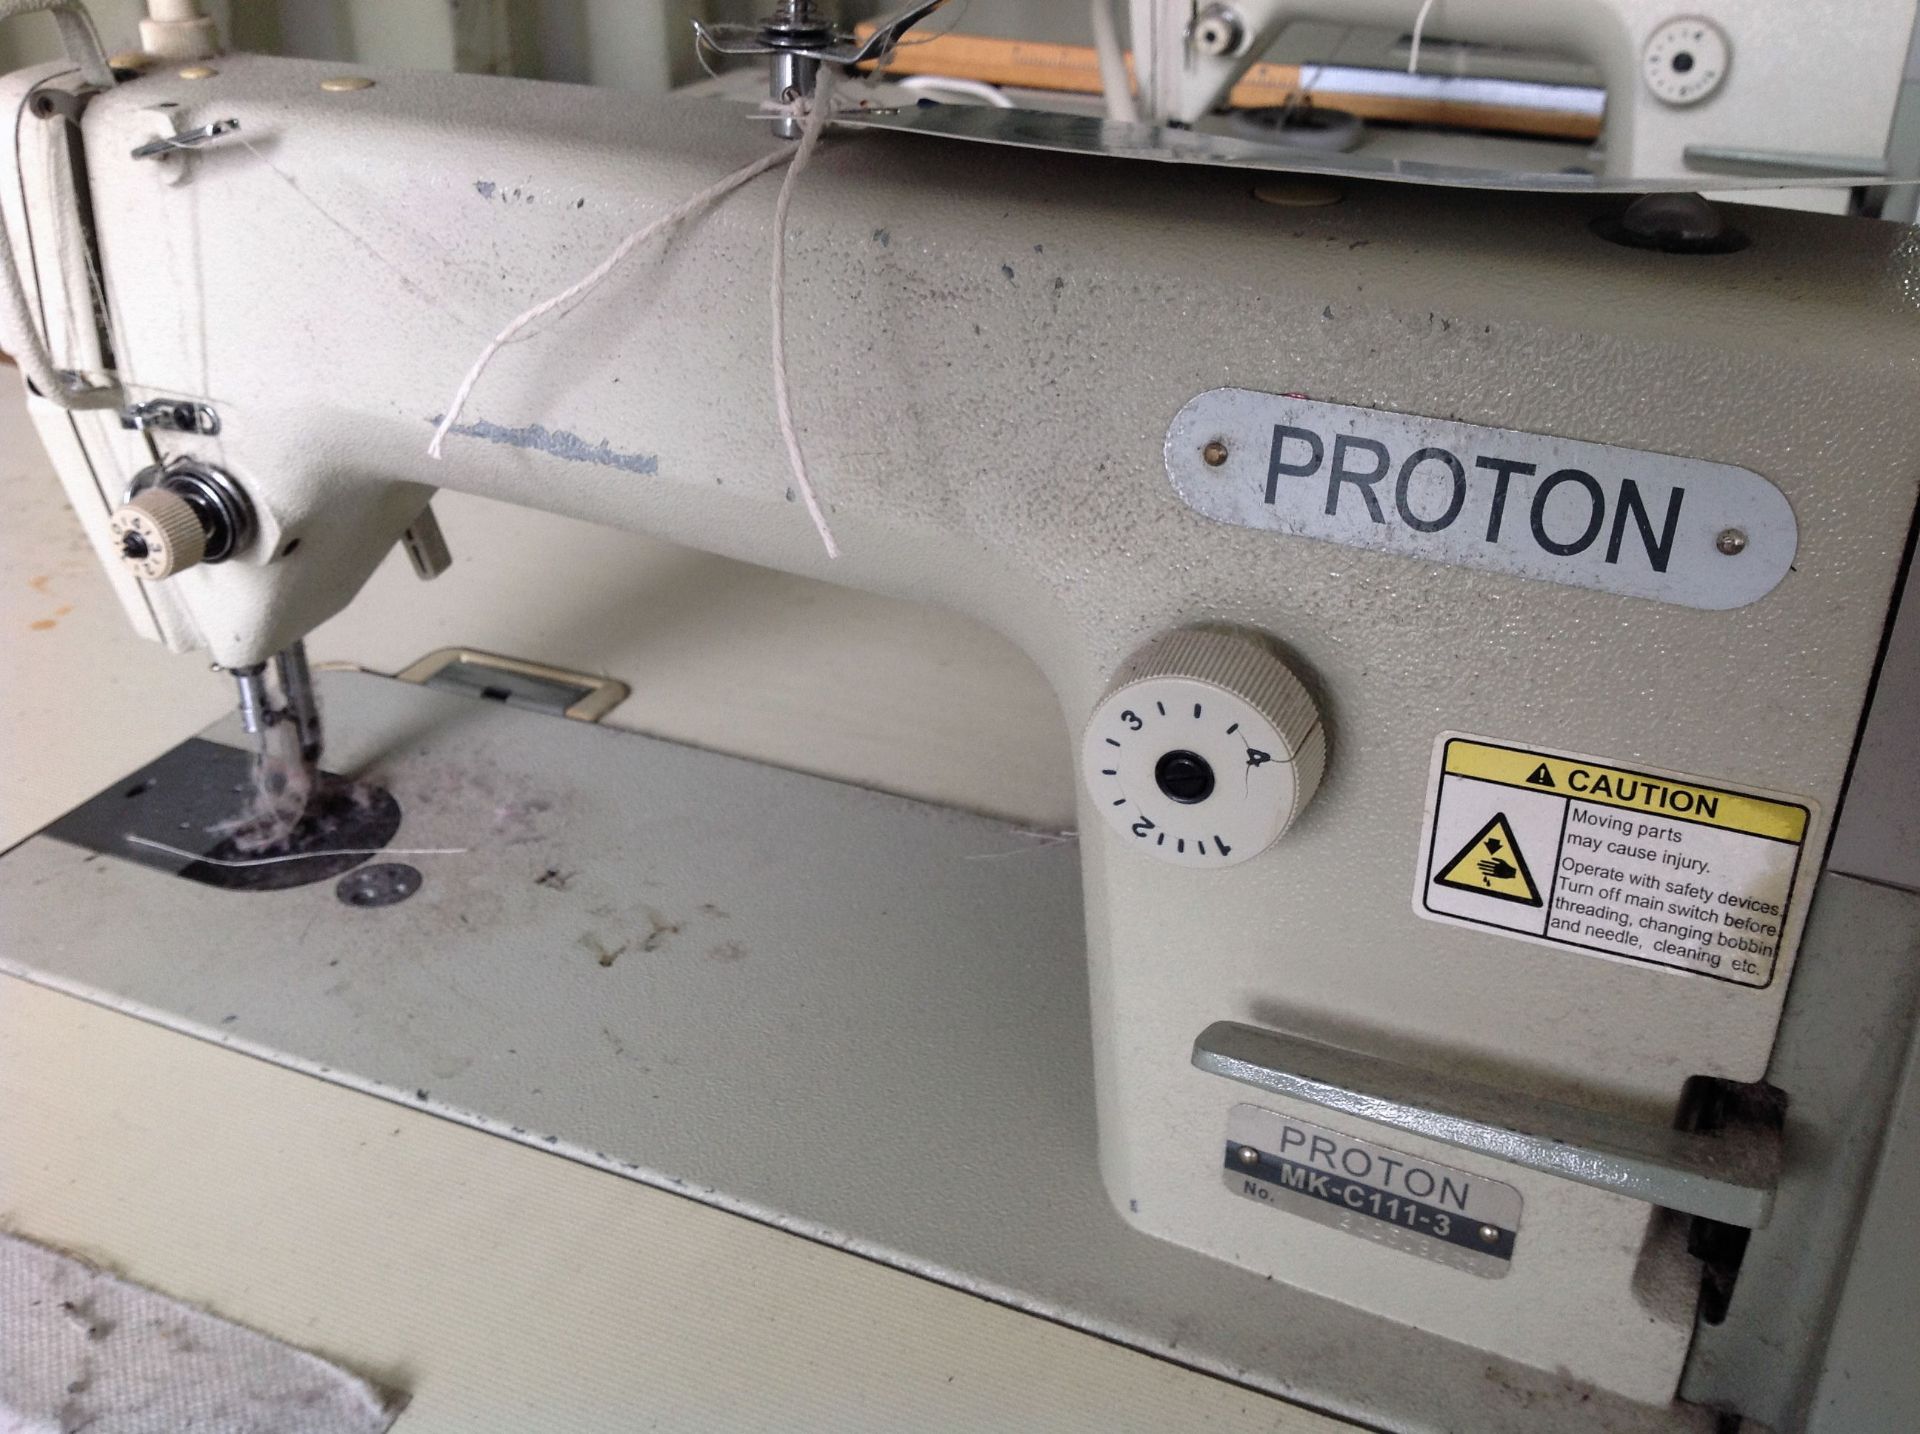 A Proton MK-C111-3 Single Needle Lockstitch Sewing Machine No.2003092684 with power bench (240v).